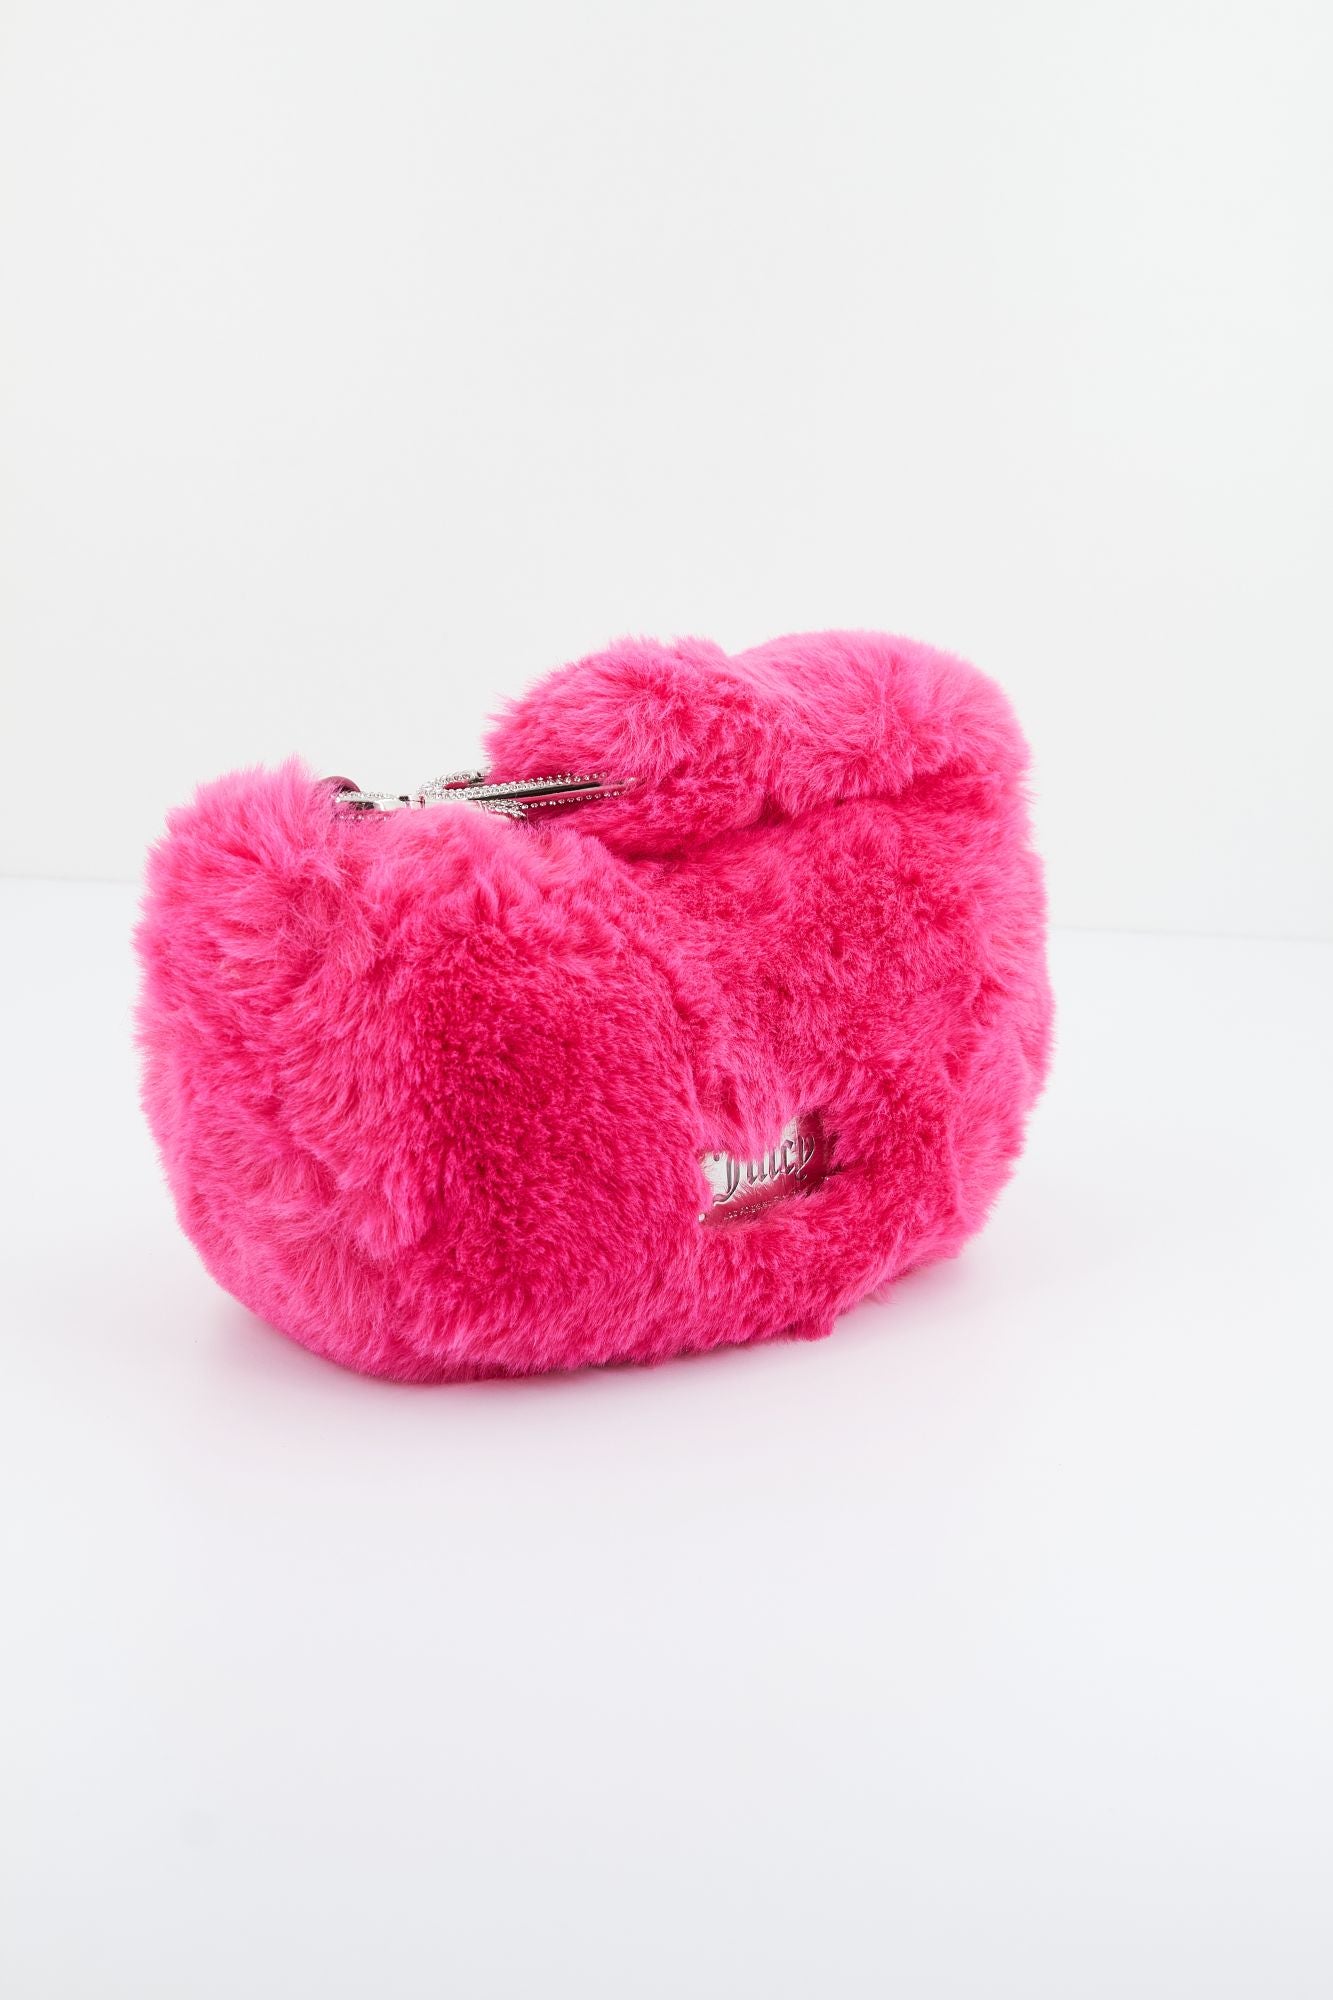 JUICY COUTURE BERRY SMALL HOBO BAG en color ROSA (2)